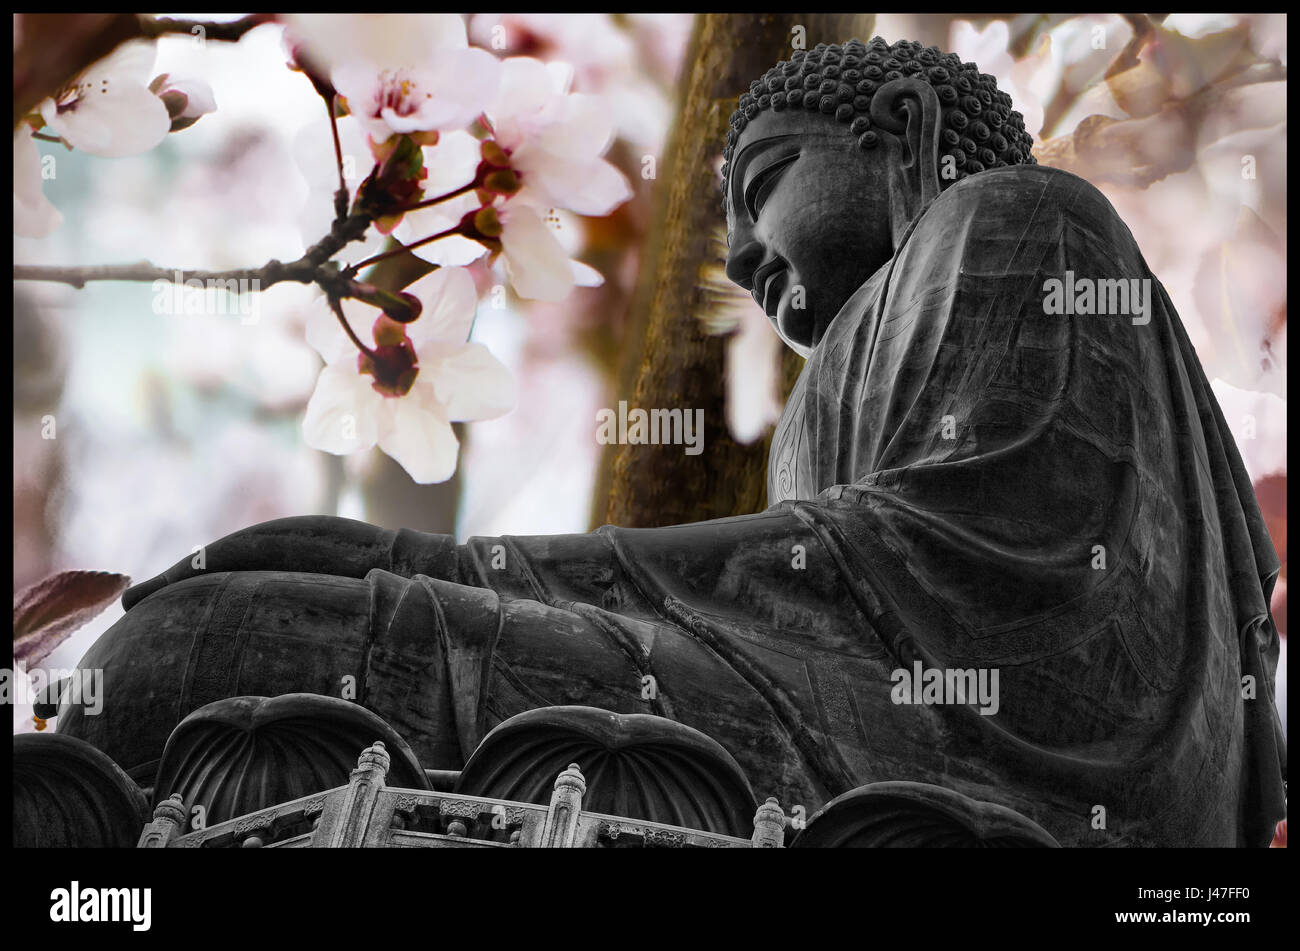 Buddha statue, flower background. Art and spiritualism Stock Photo